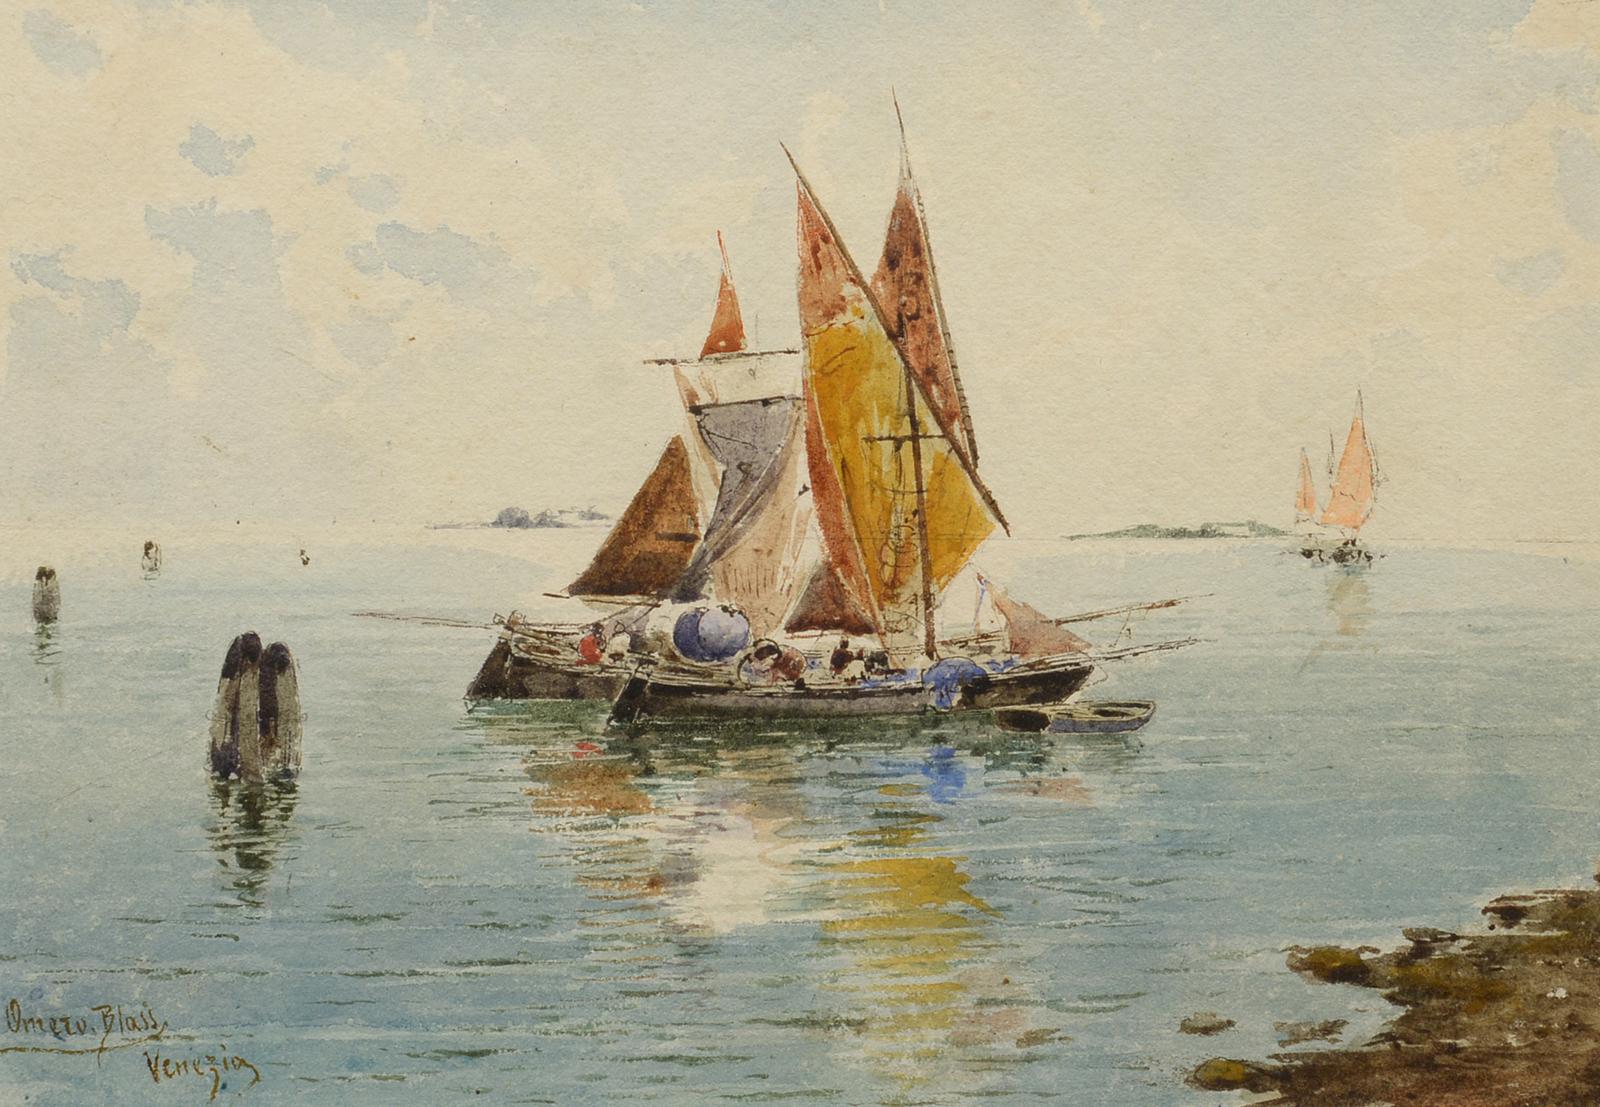 Imero Blass Landscape Painting - "Venizia, " Venice, Italy, watercolor, sailboats, 19th century, realism, seascape